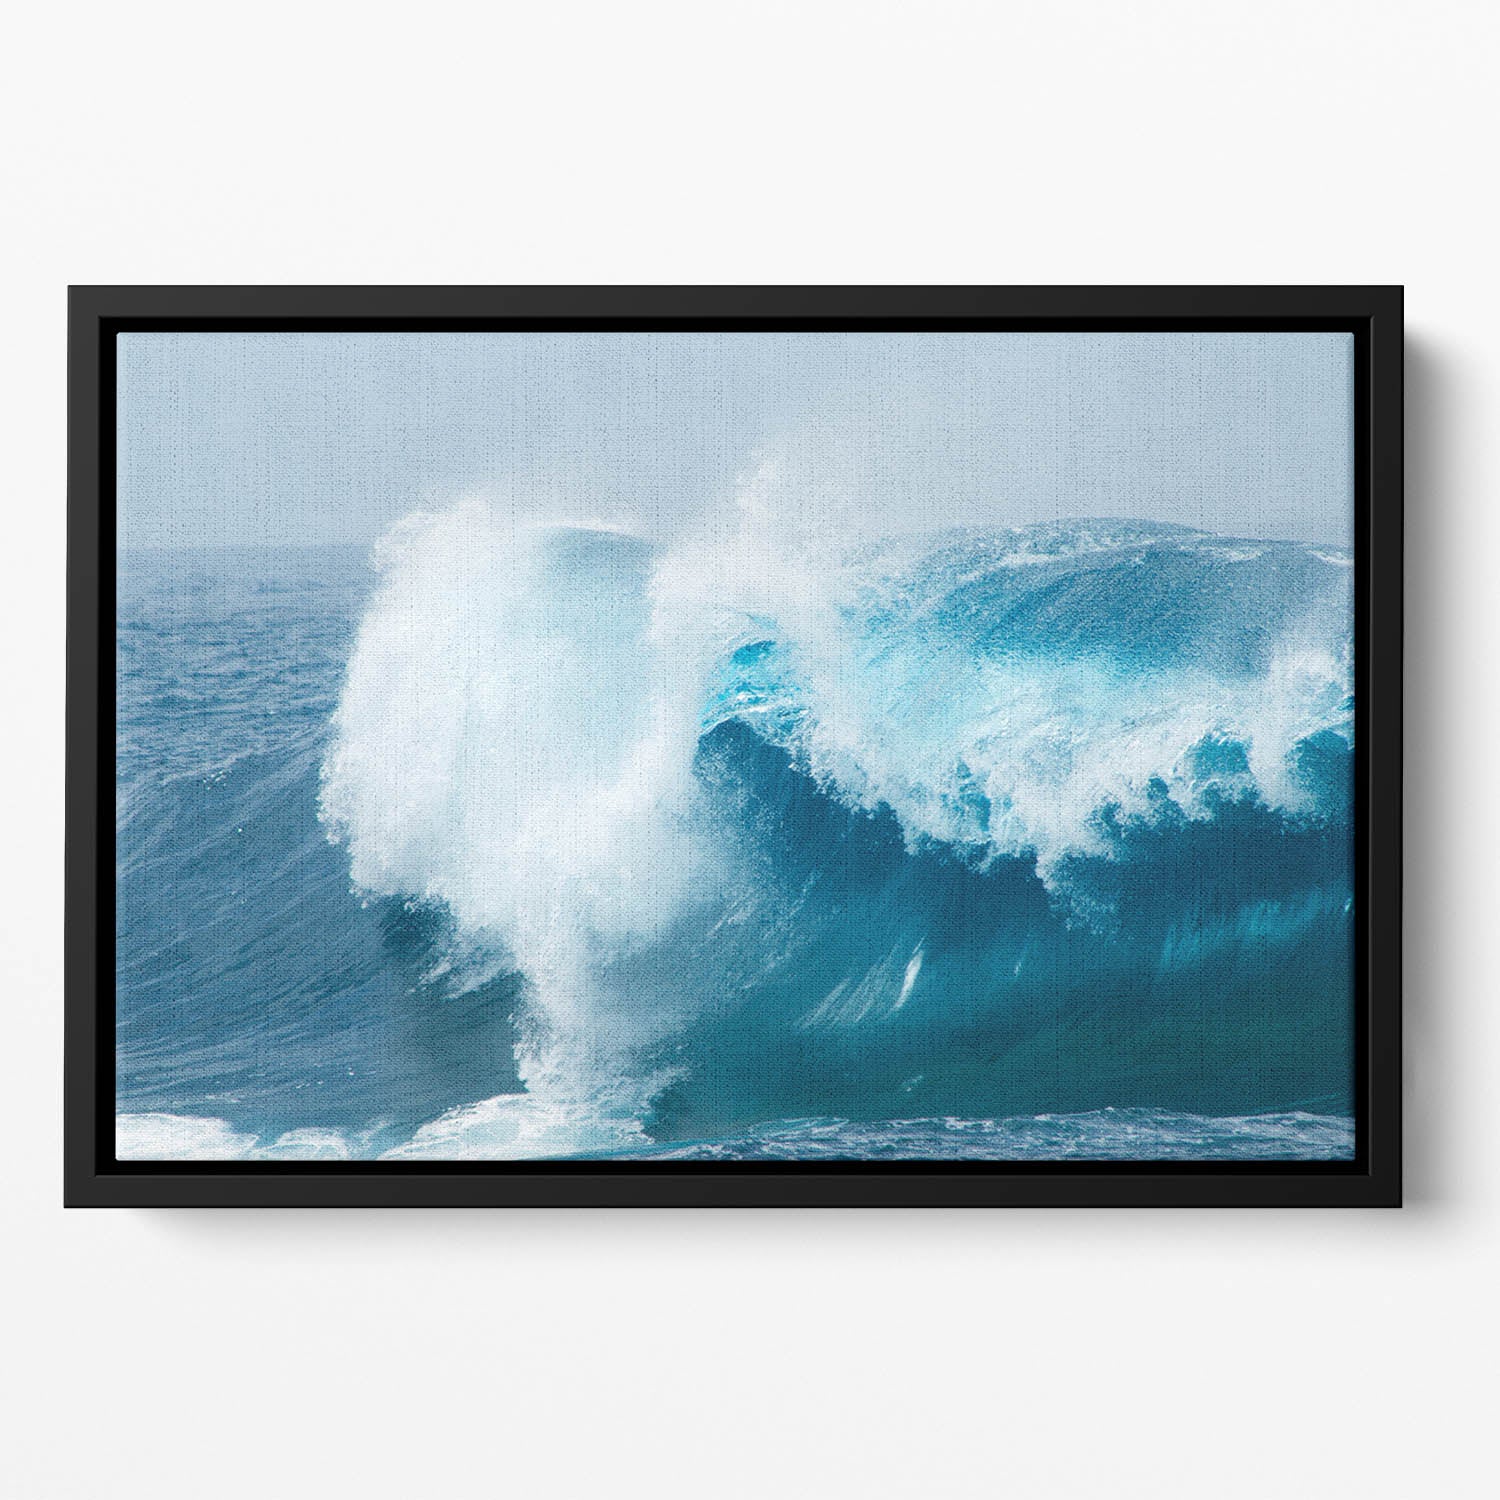 Ocean waves breaking natural Floating Framed Canvas